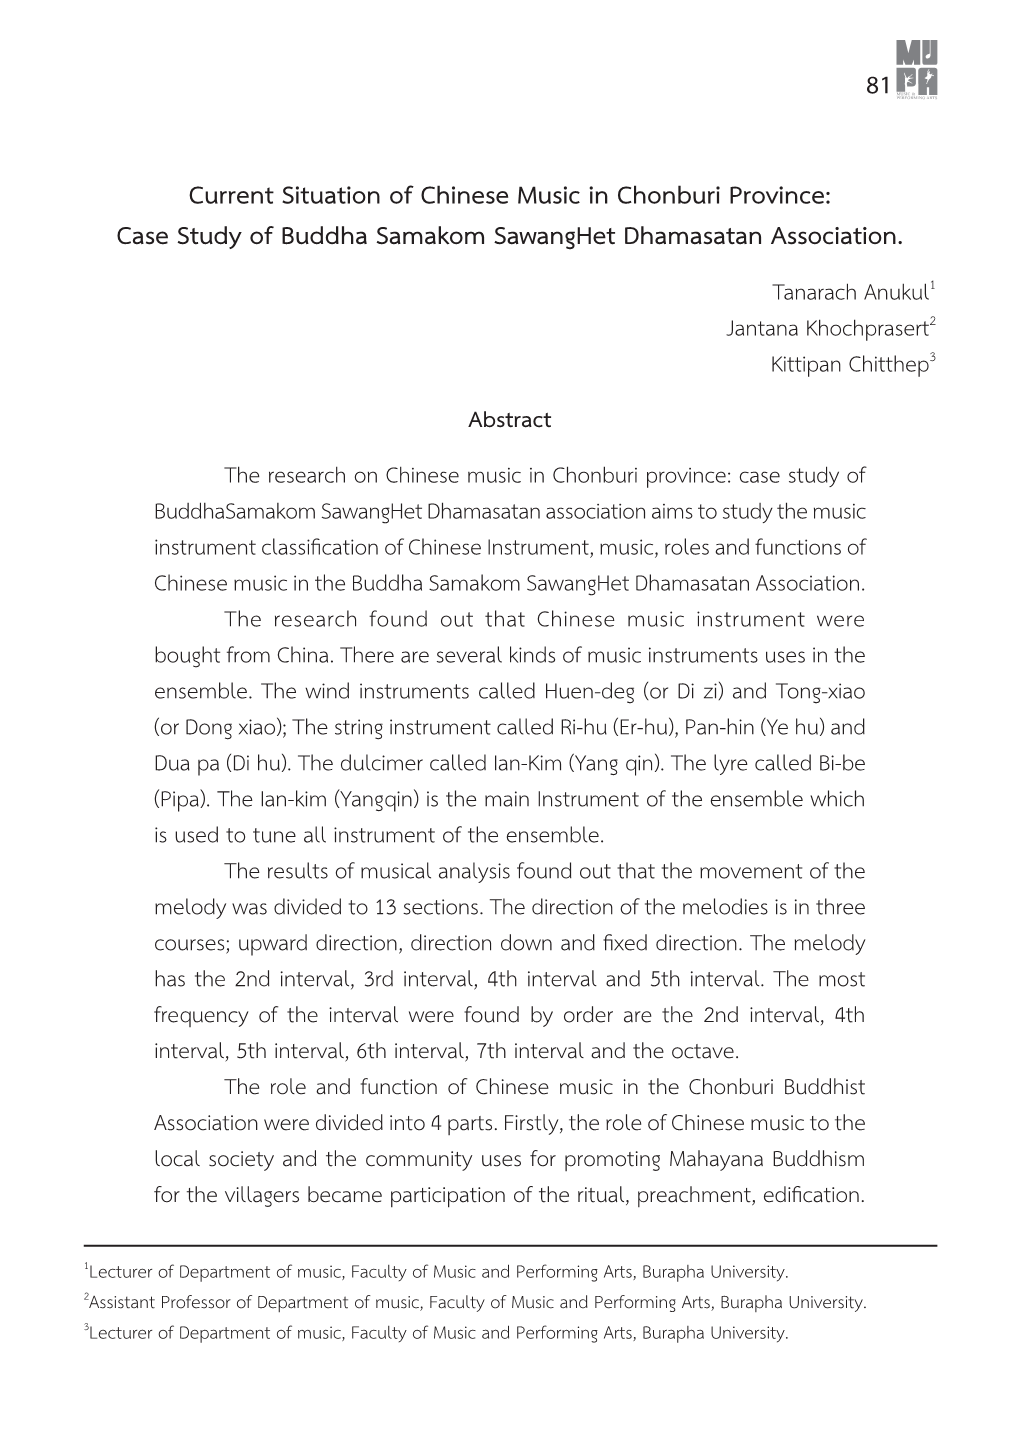 Case Study of Buddha Samakom Sawanghet Dhamasatan Association